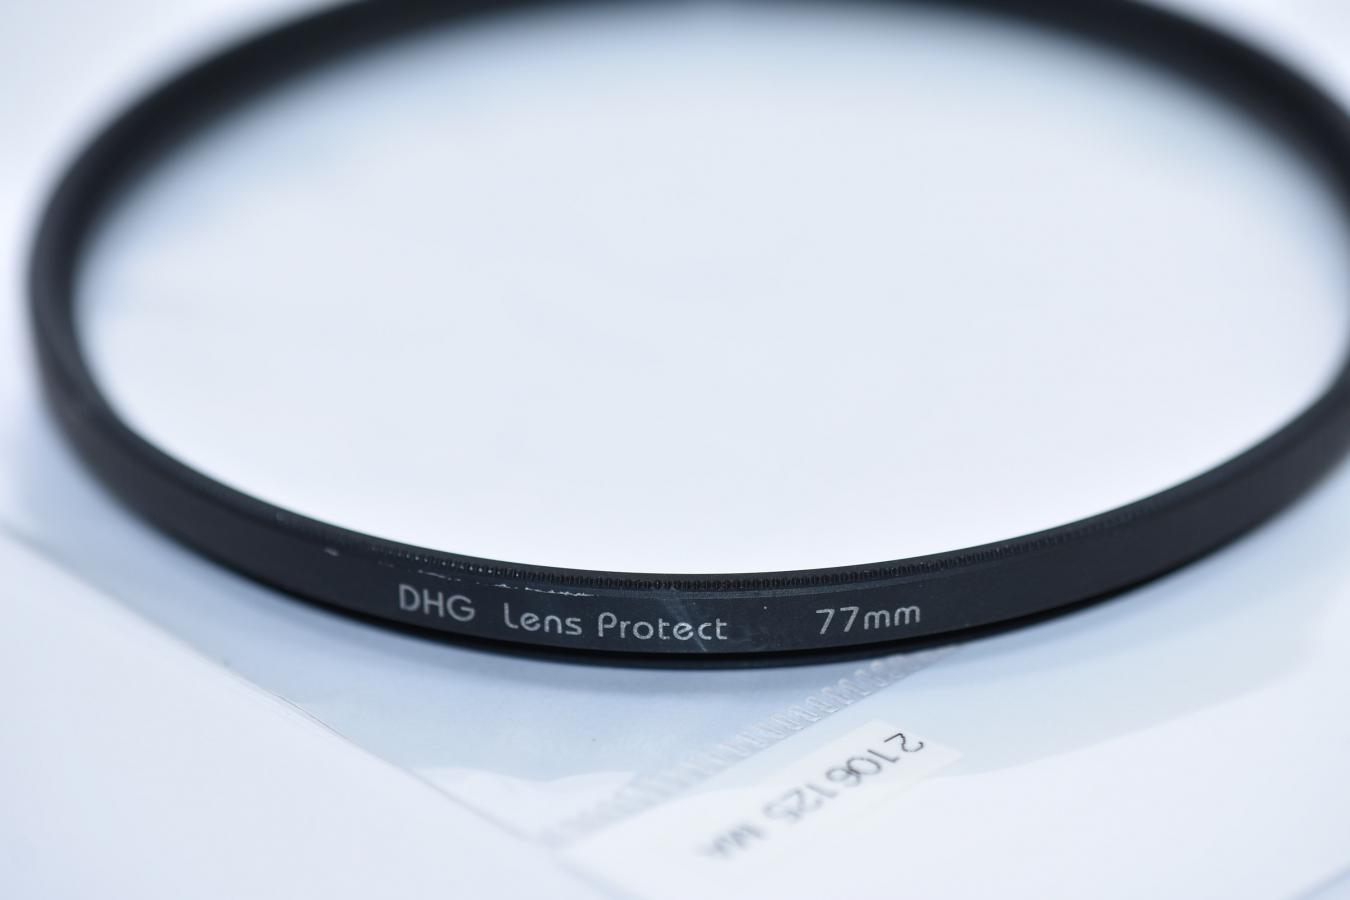 MARUMI DHG Lens Protect Filter 77mm 【メーカー希望小売価格6,600円】